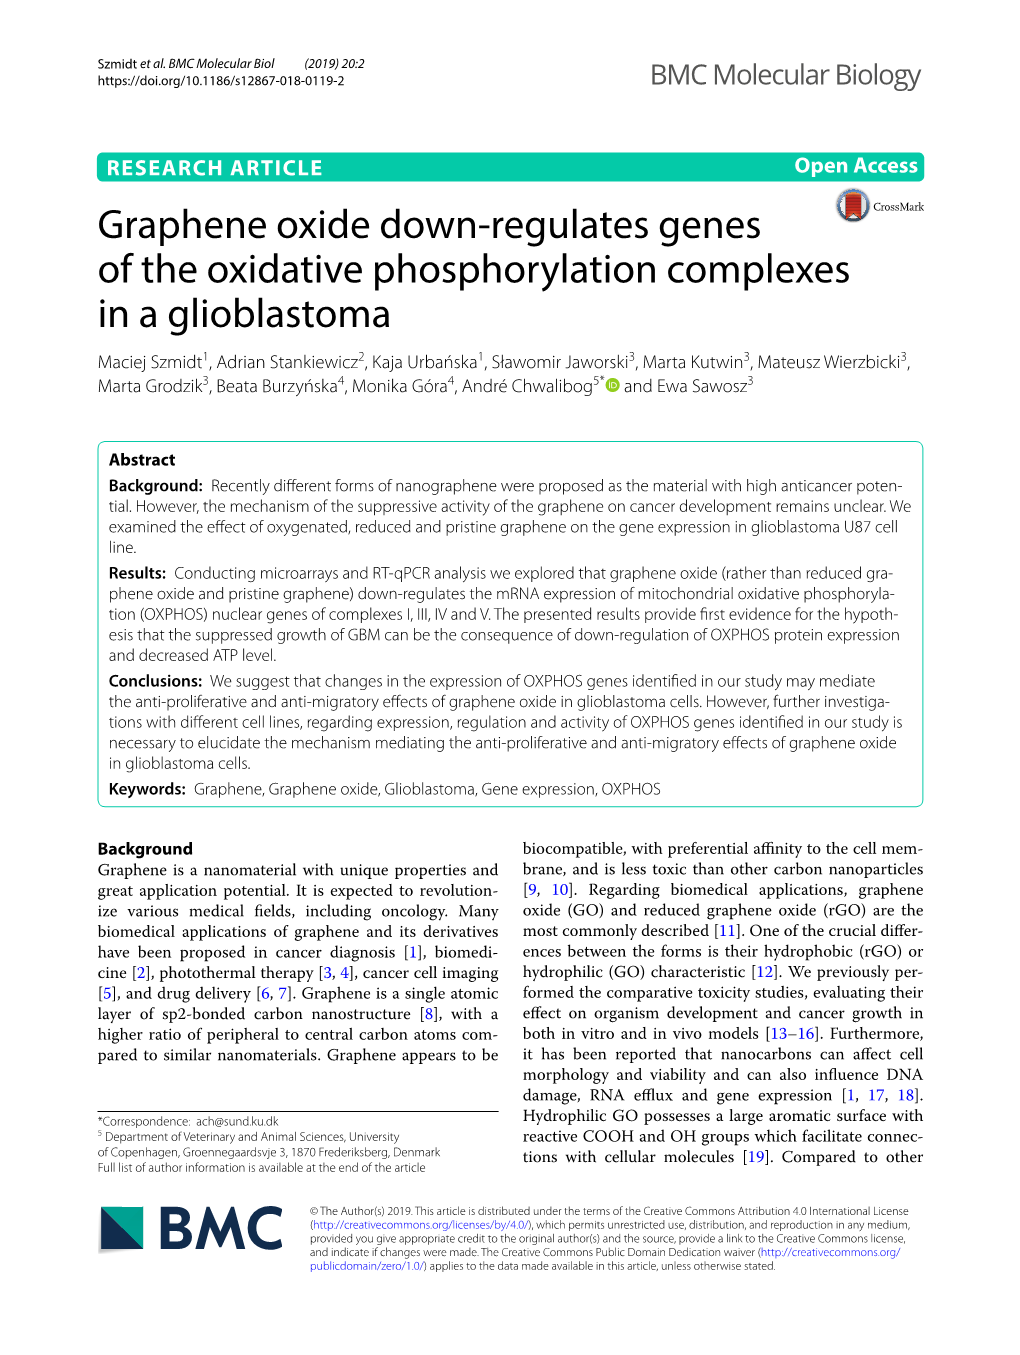 Graphene Oxide Down-Regulates Genes of the Oxidative